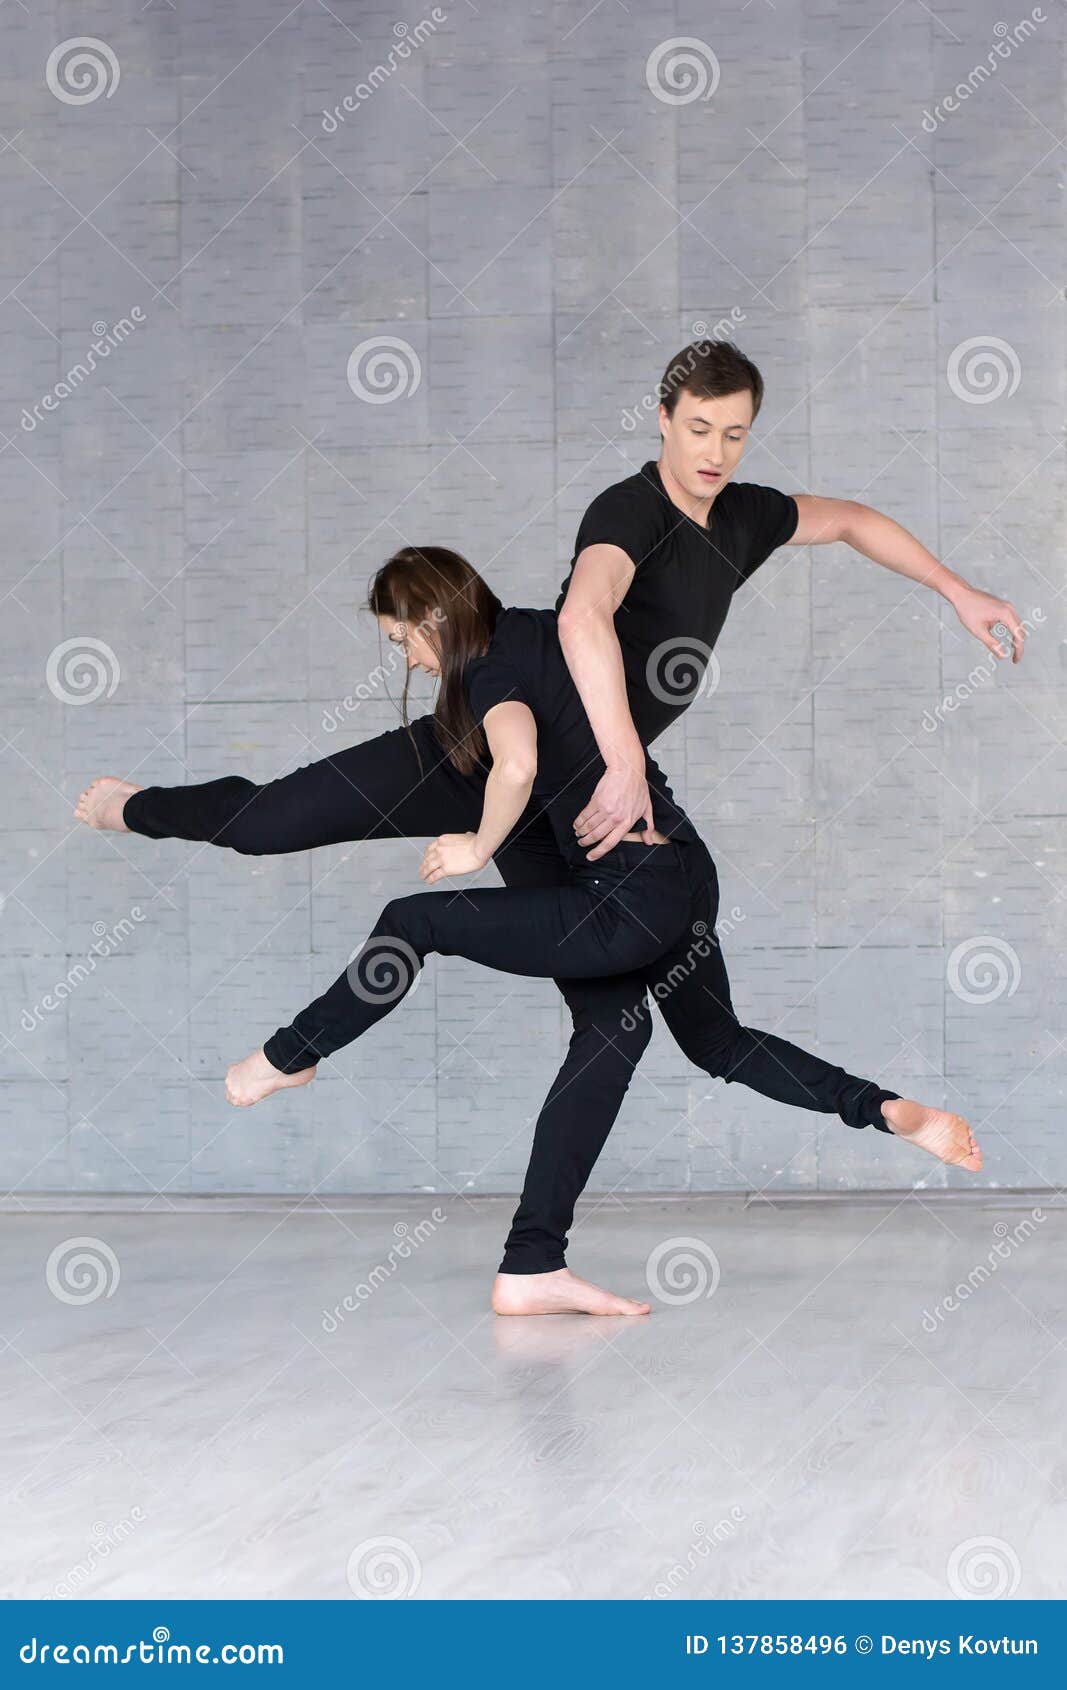 Dance photography poses, Acro dance, Dance poses